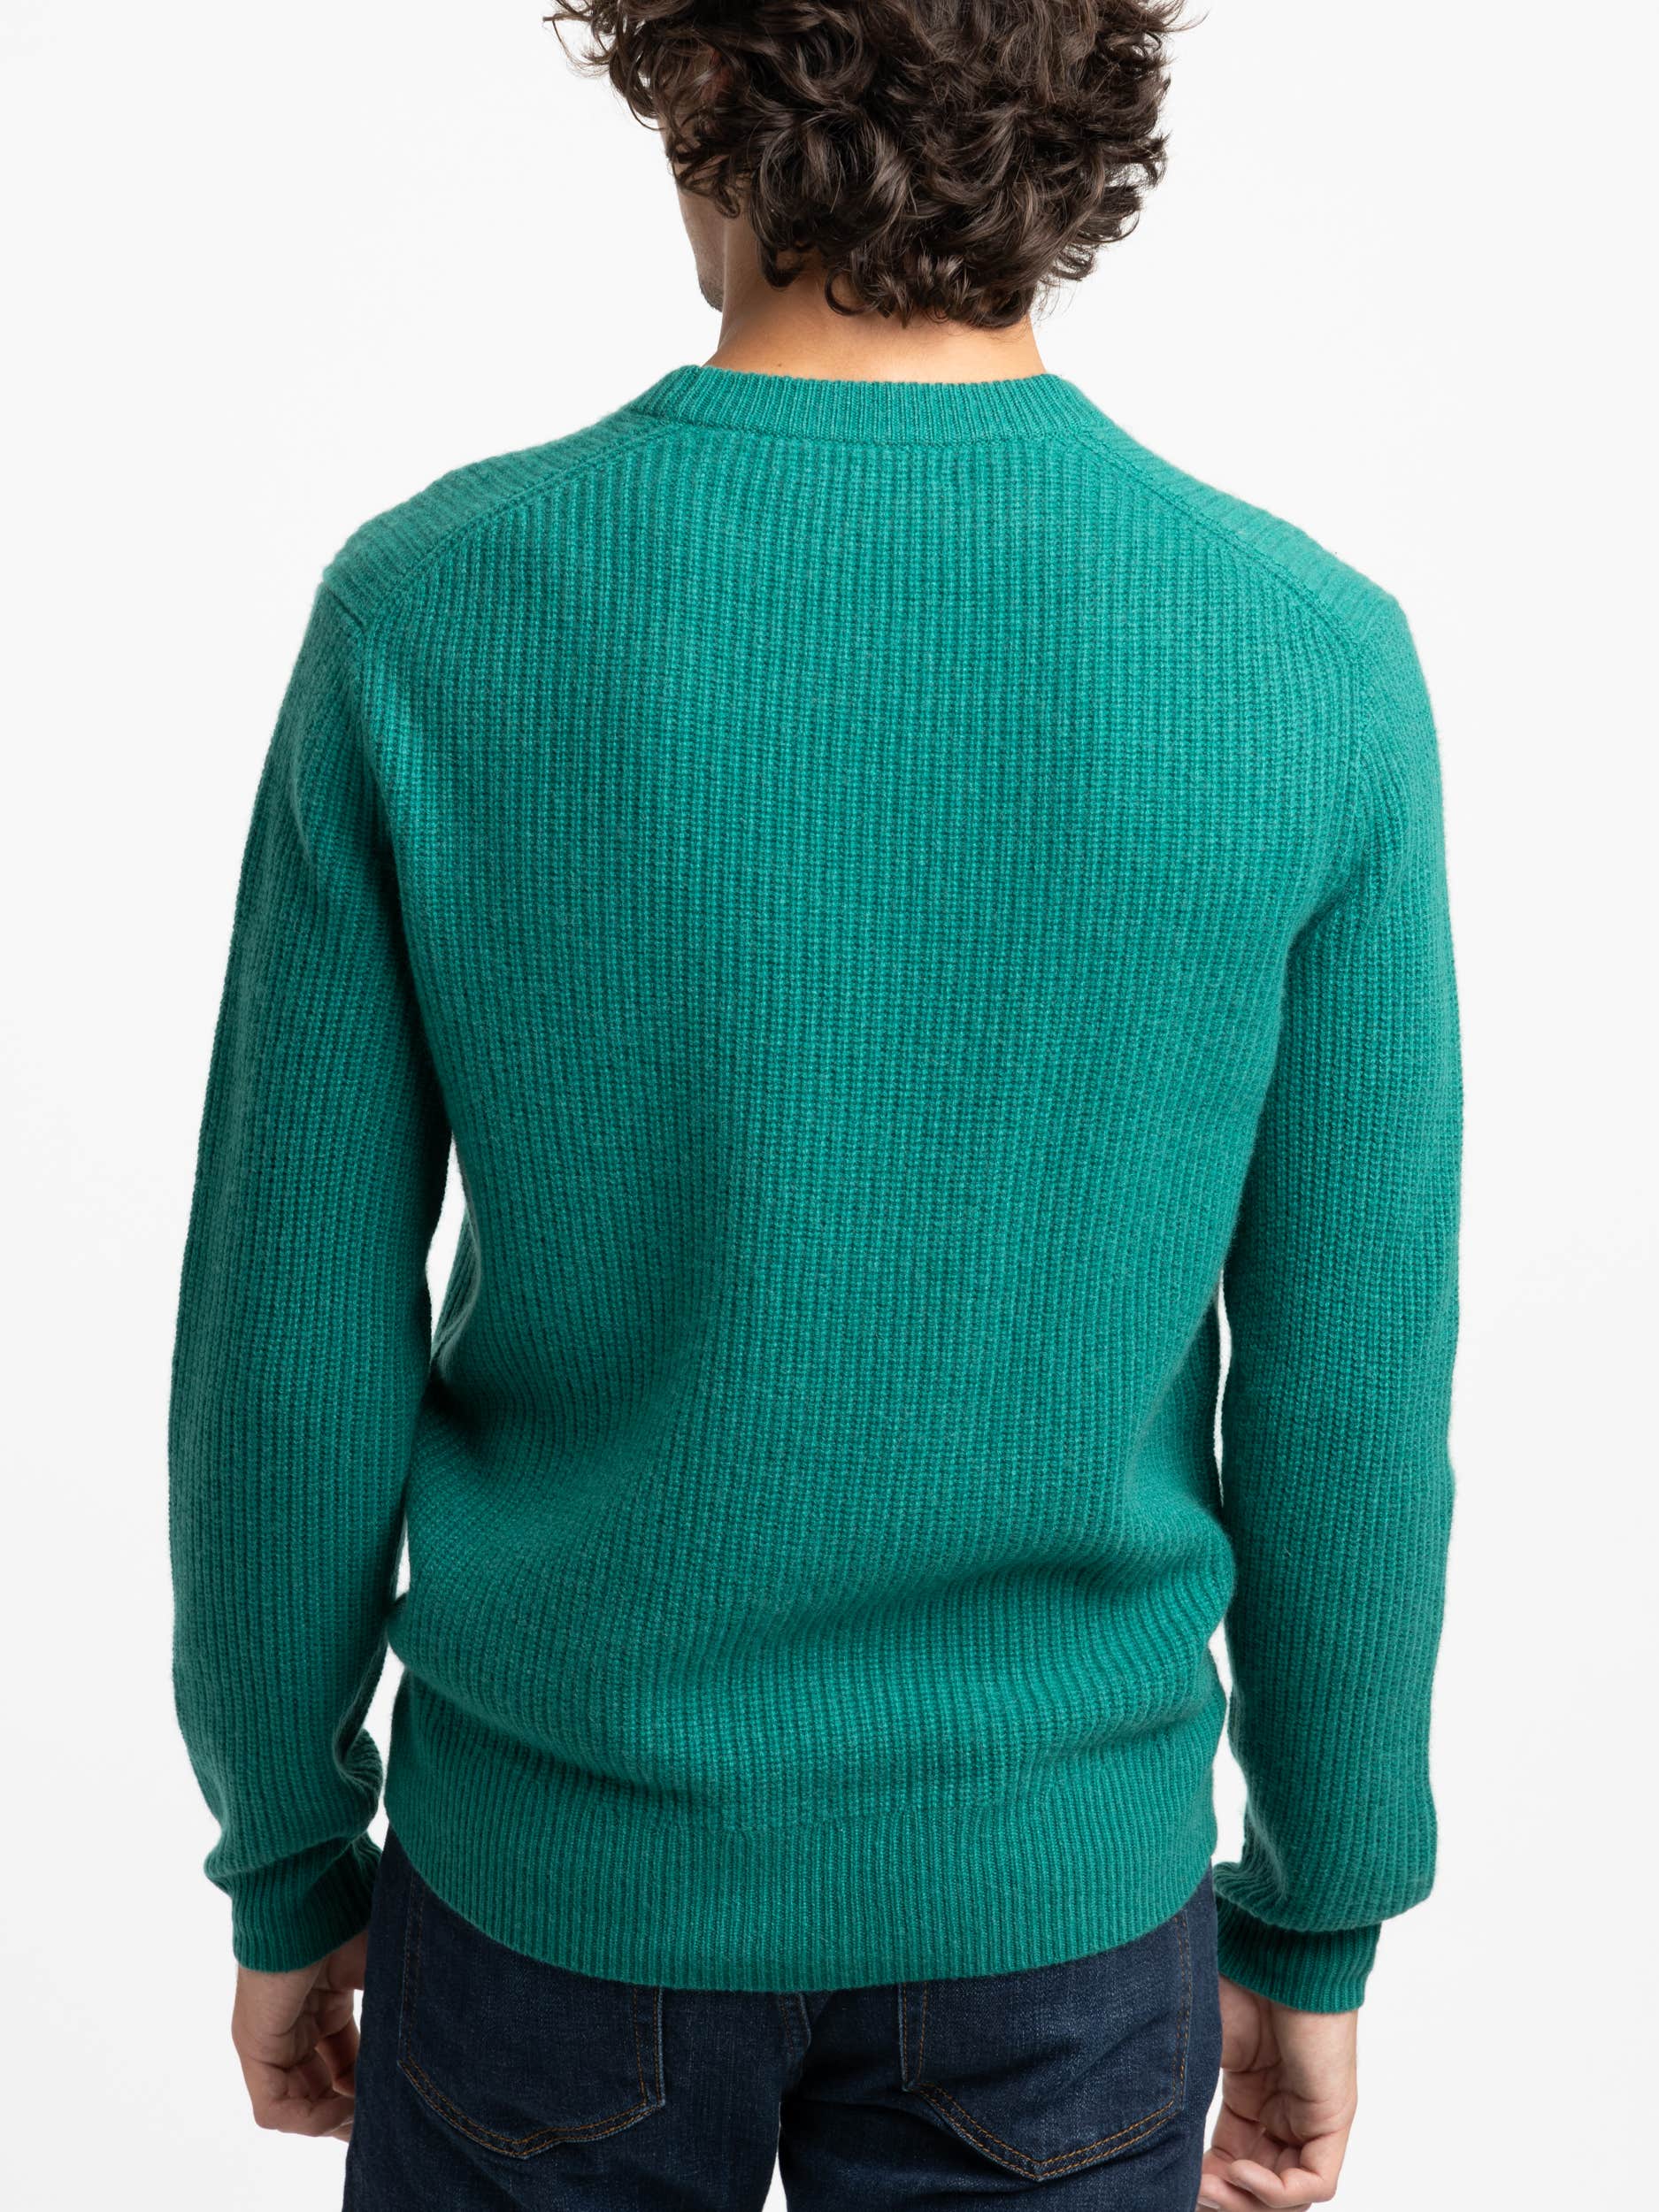 Ribbed Crewneck Sweater – Alex Mill